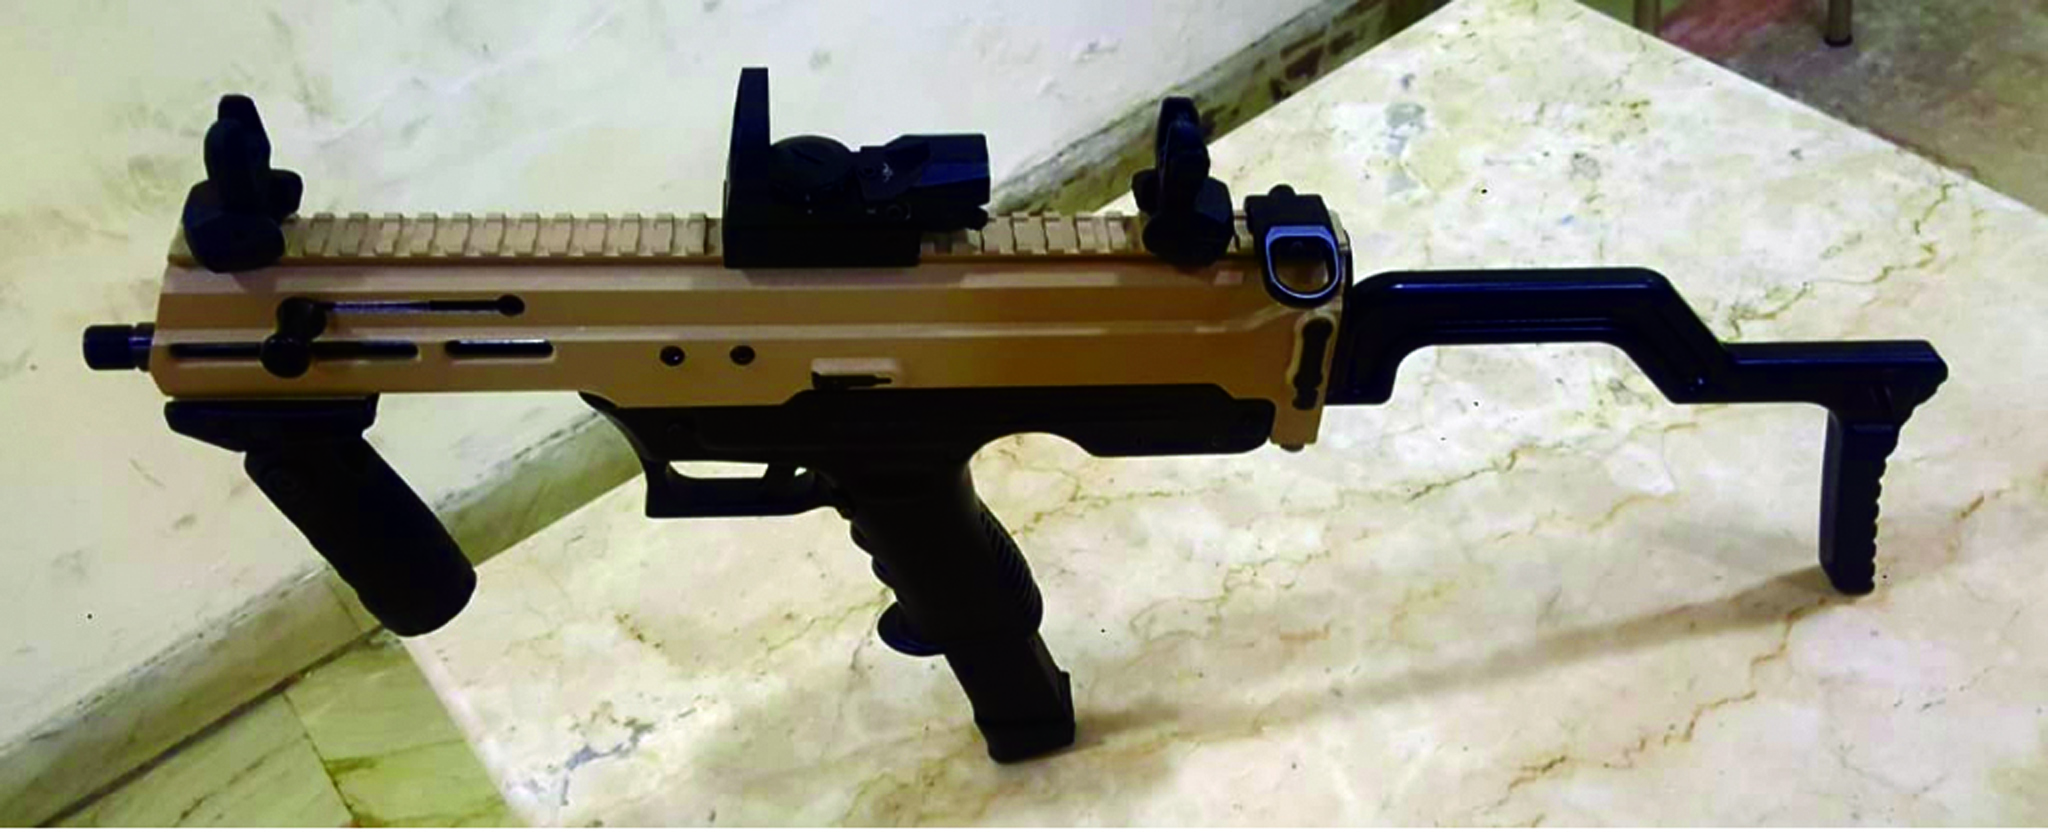 ‘Asmi’ Pistol: India’s First Indigenously Developed 9mm Machine Pistol